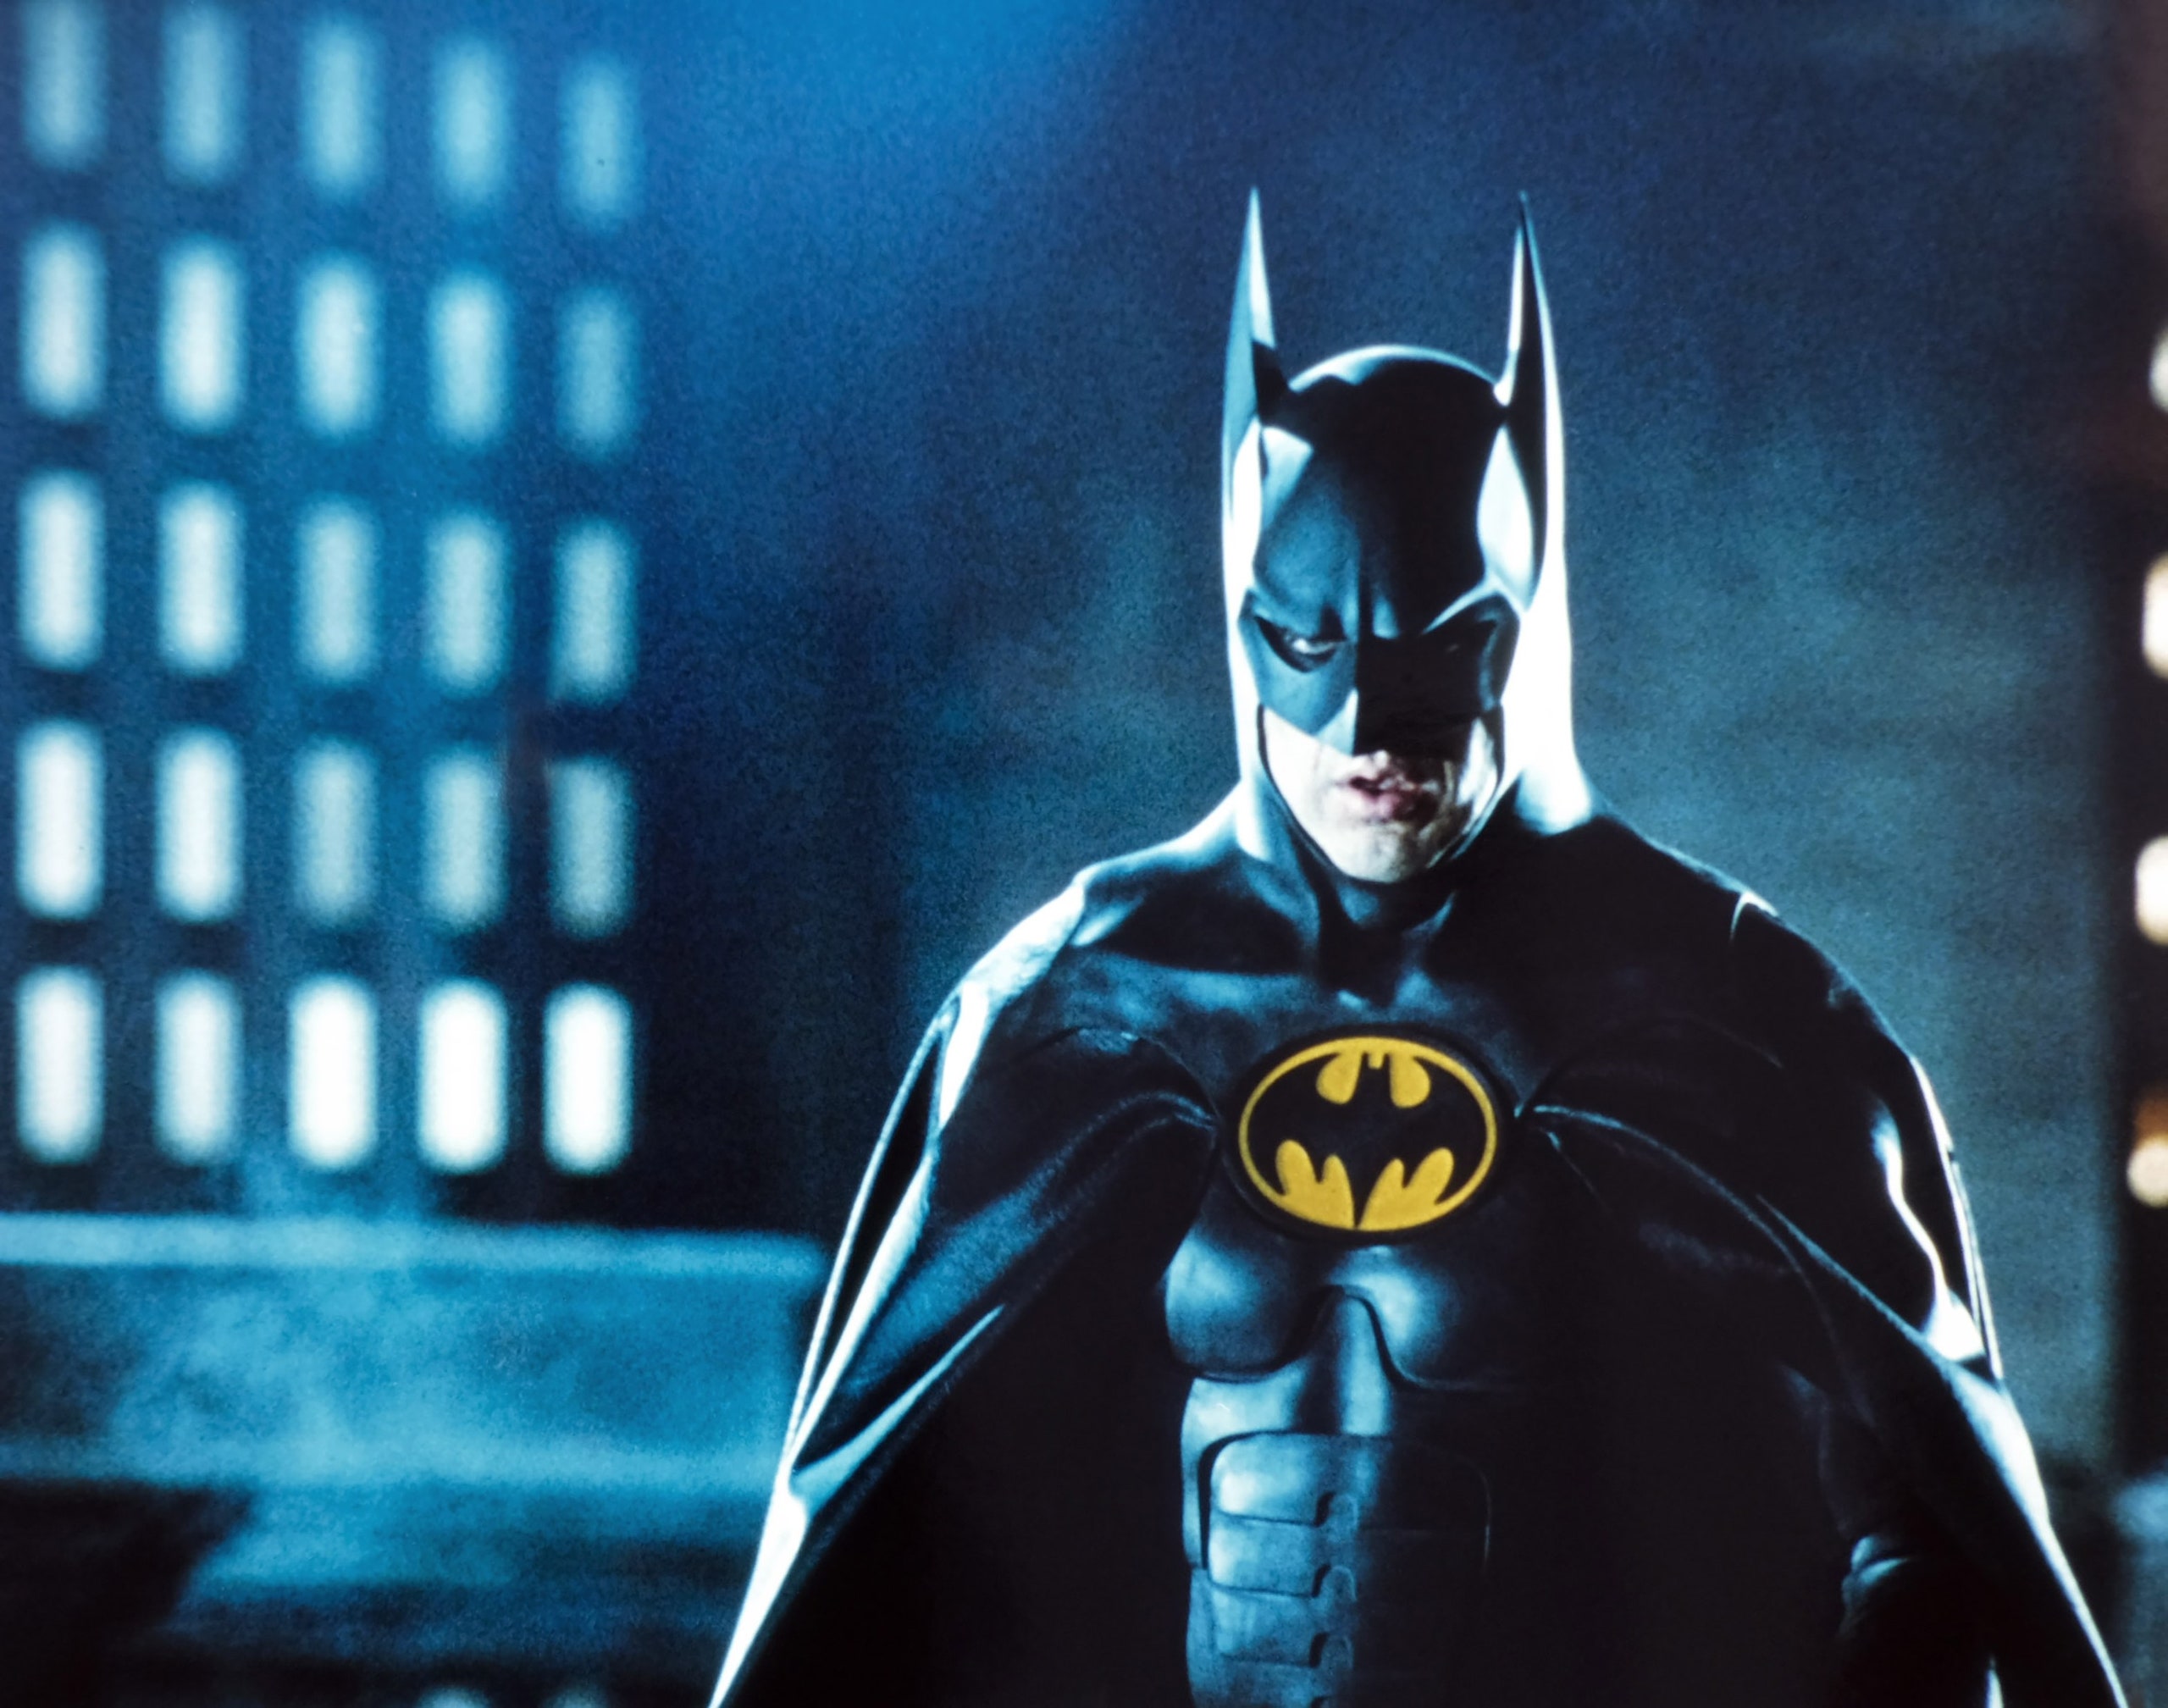 Michael Keaton, Batman, movie, reprise role, rumours, superhero